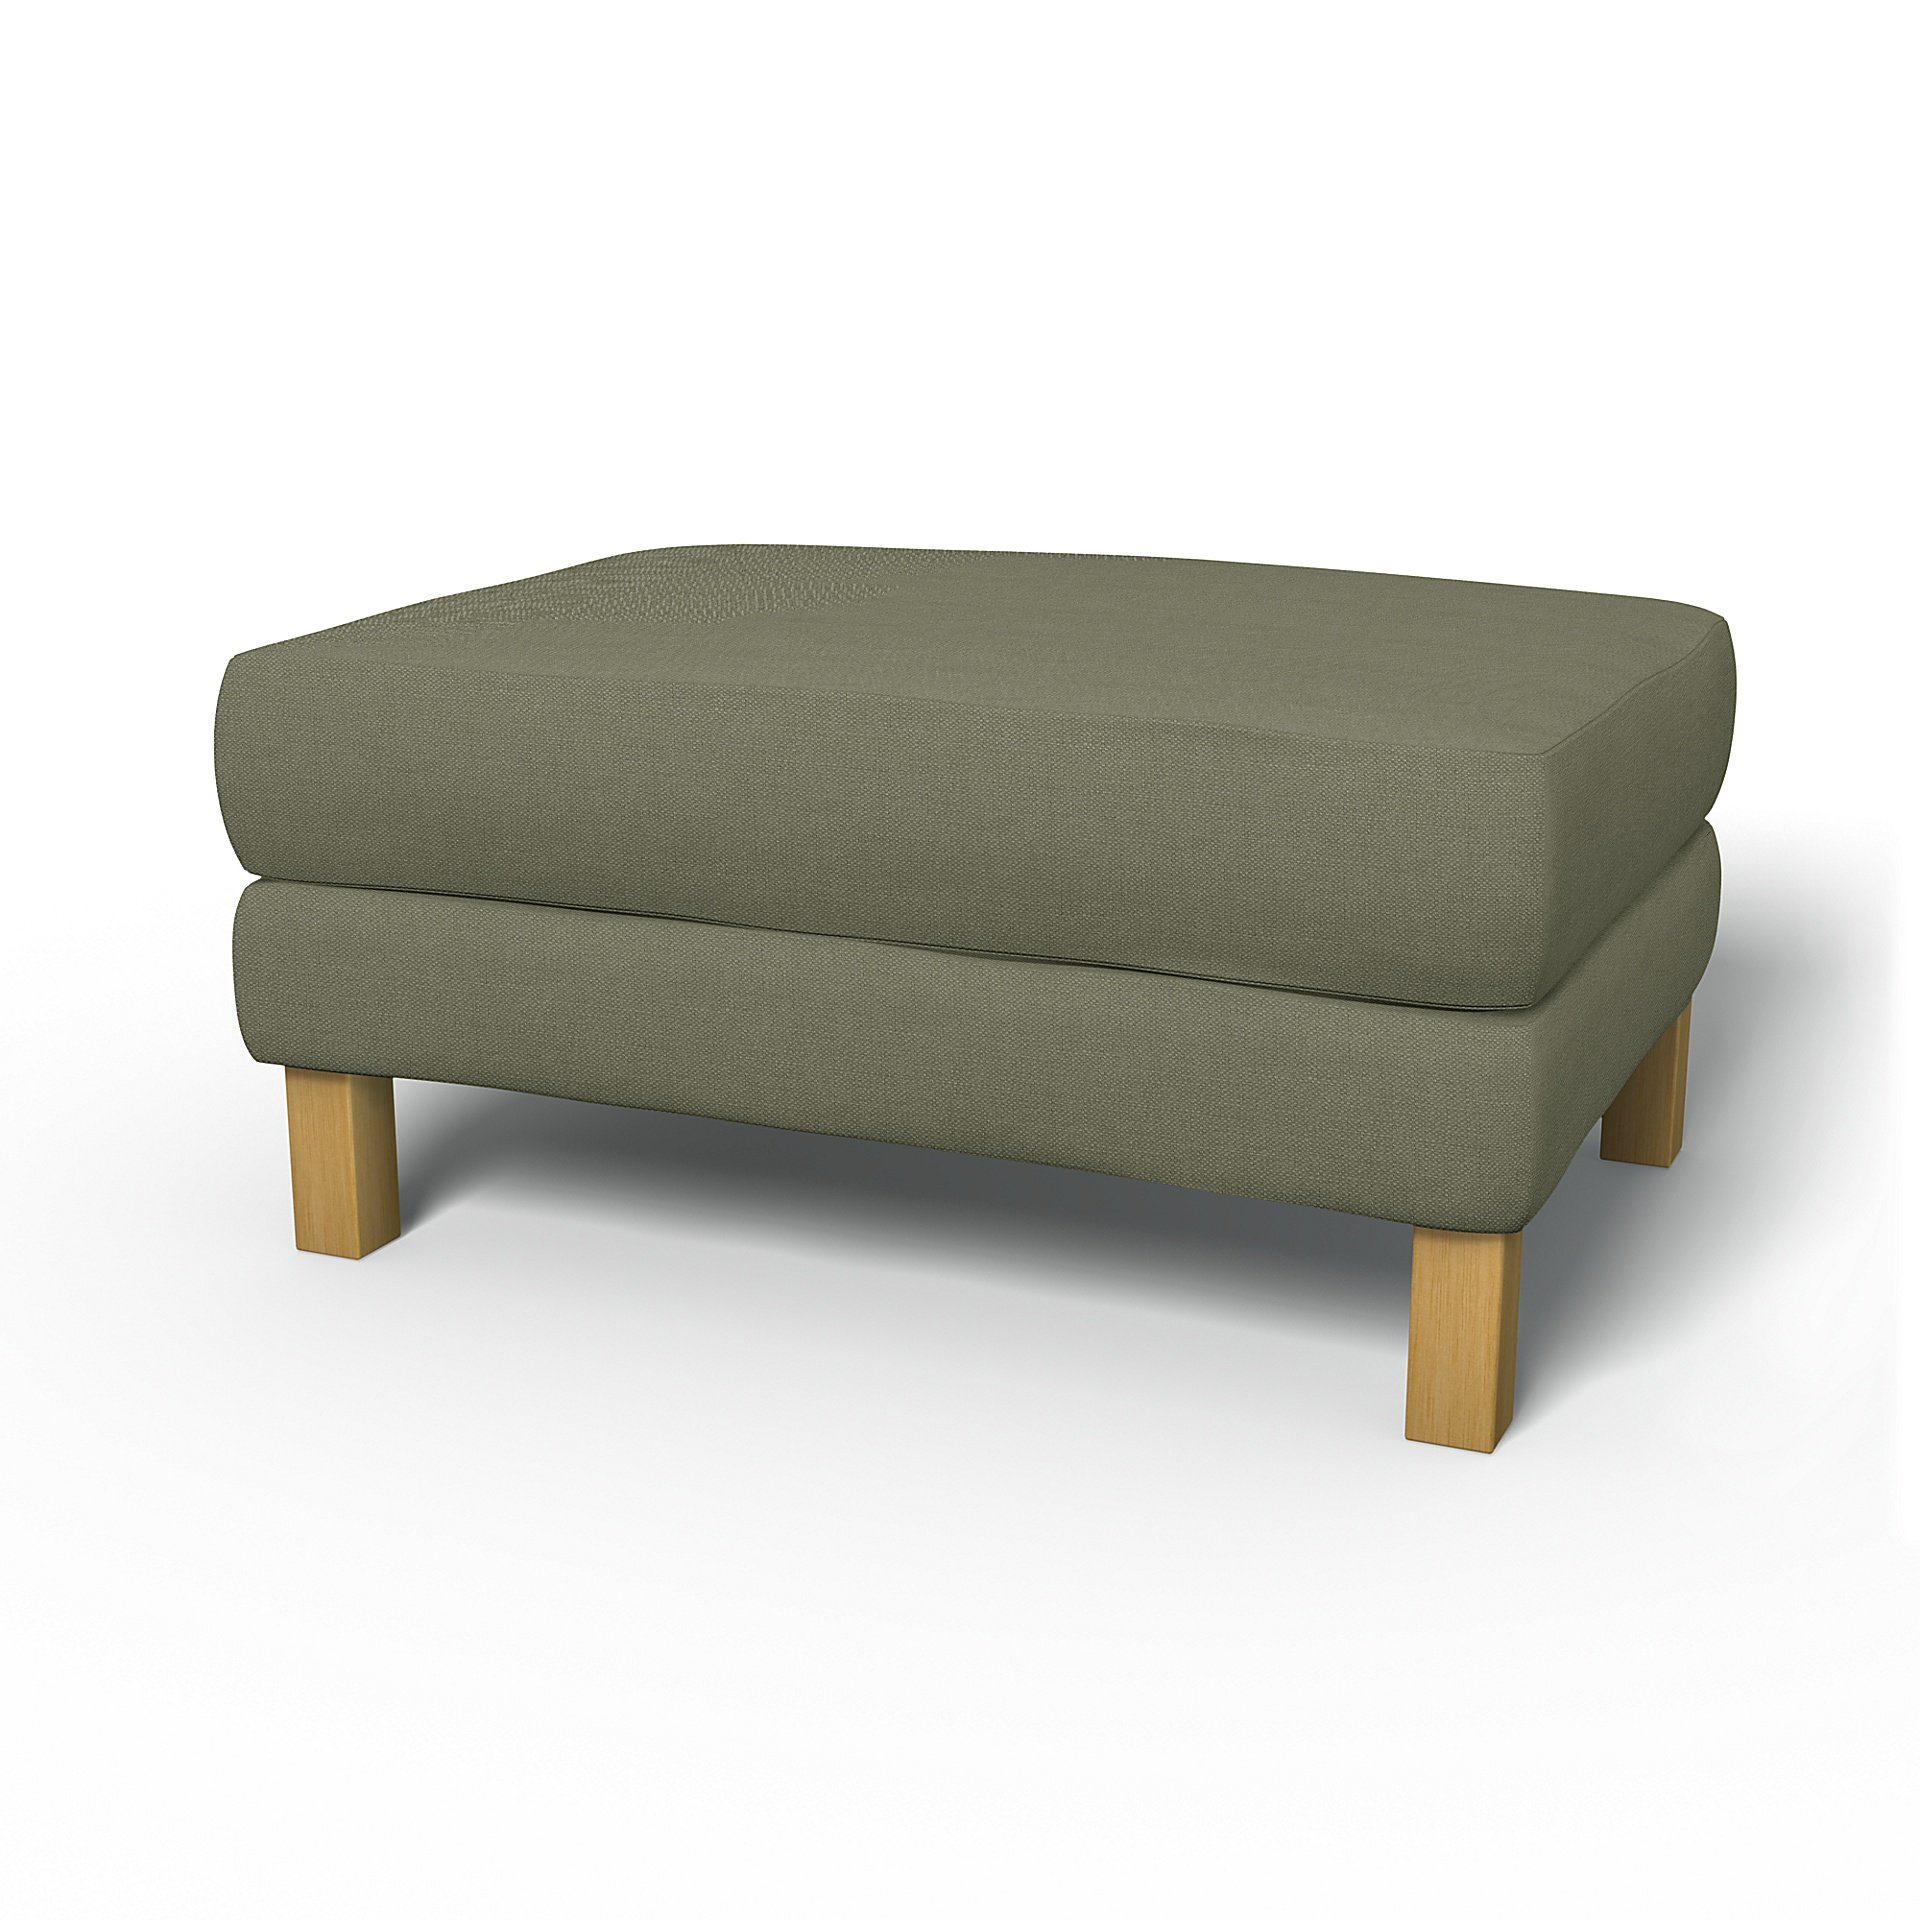 IKEA - Karlstad Footstool Cover, Sage, Linen - Bemz